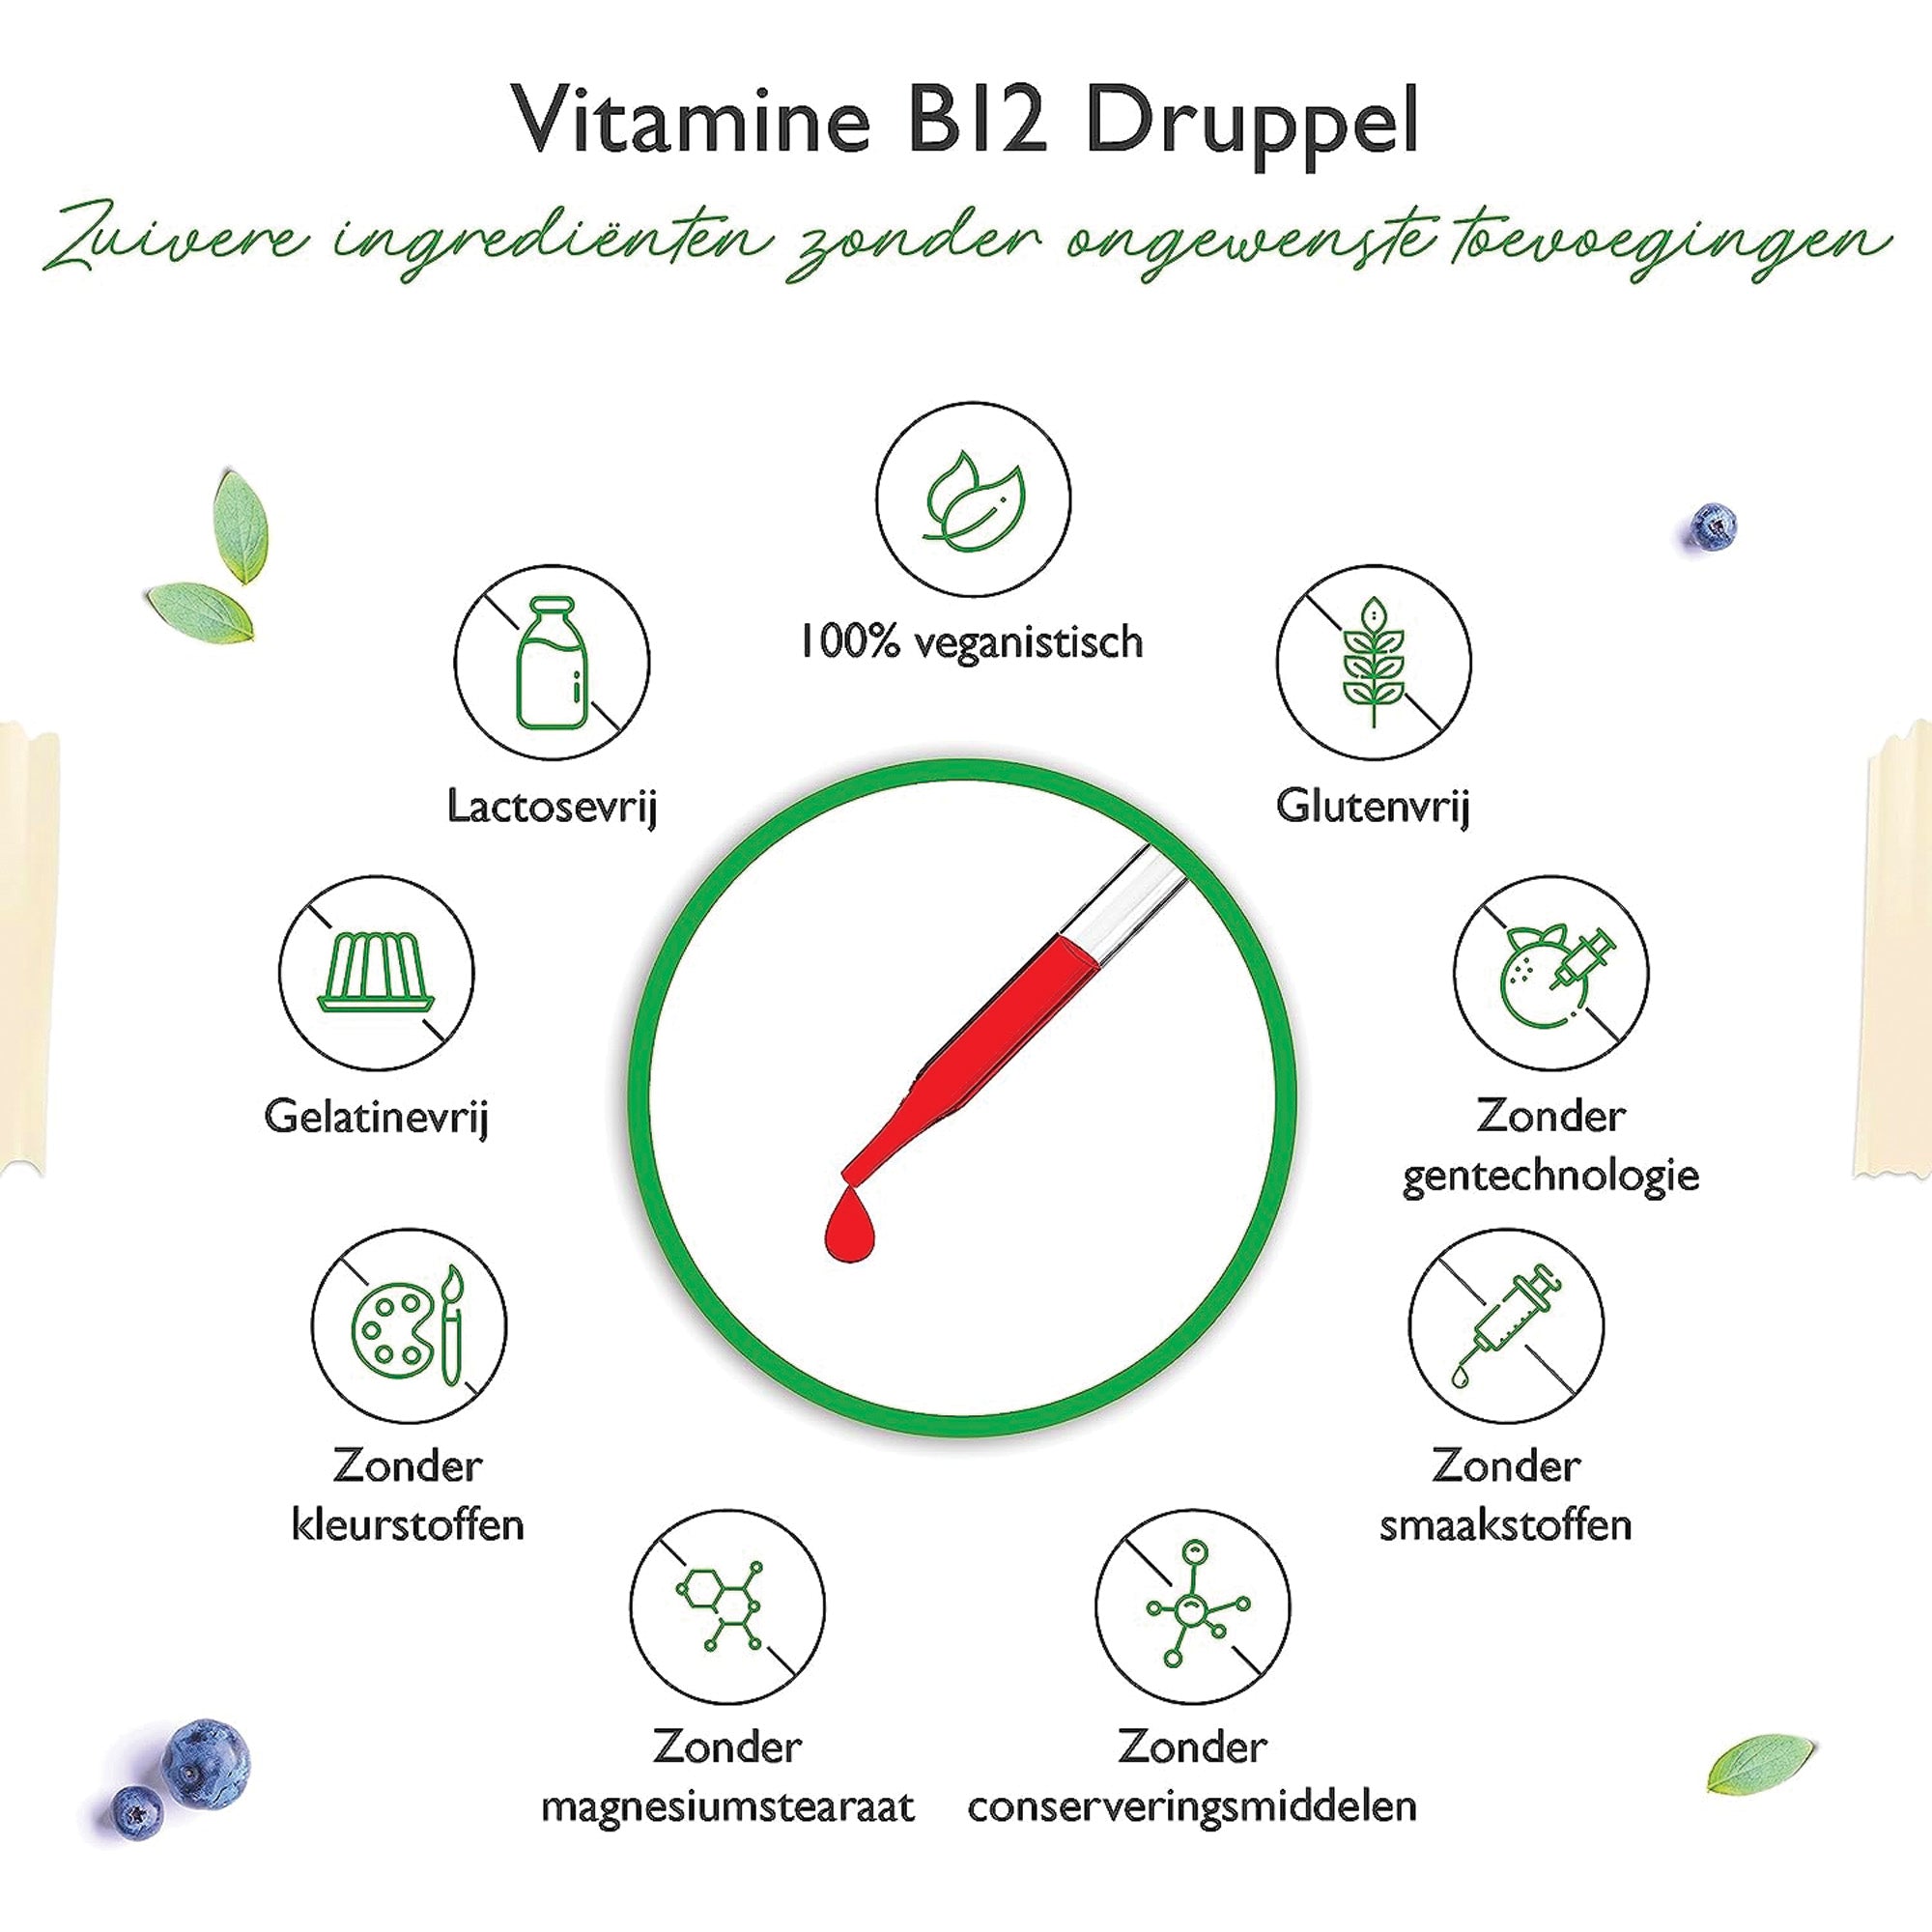 Vegan vitamine B12 druppels